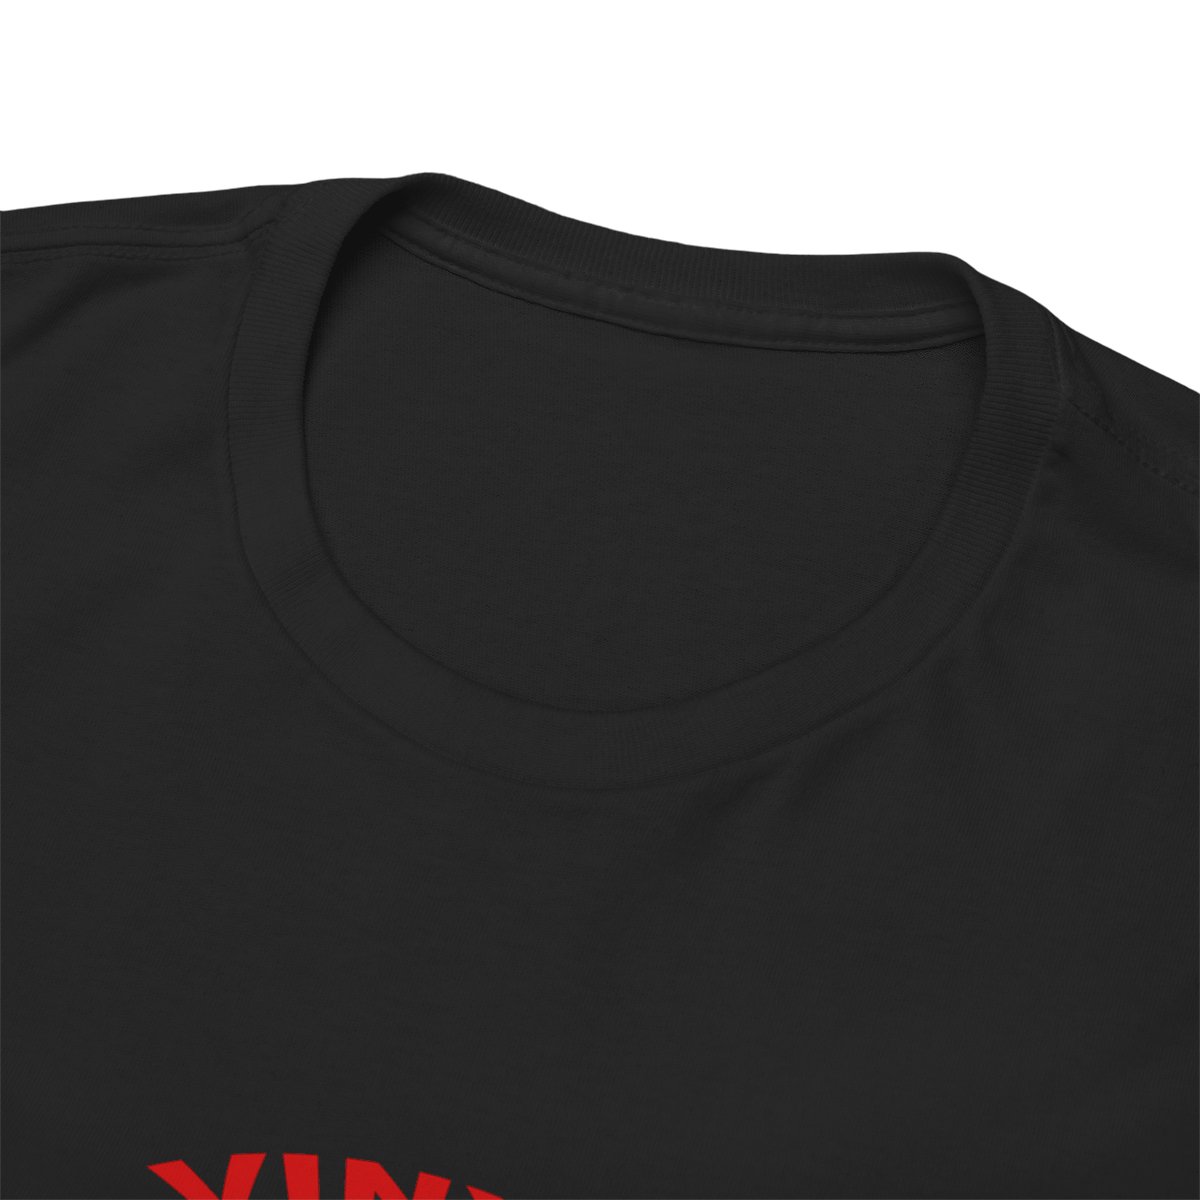 Vinyl Voyage Radio - Official Logo T-Shirt product thumbnail image